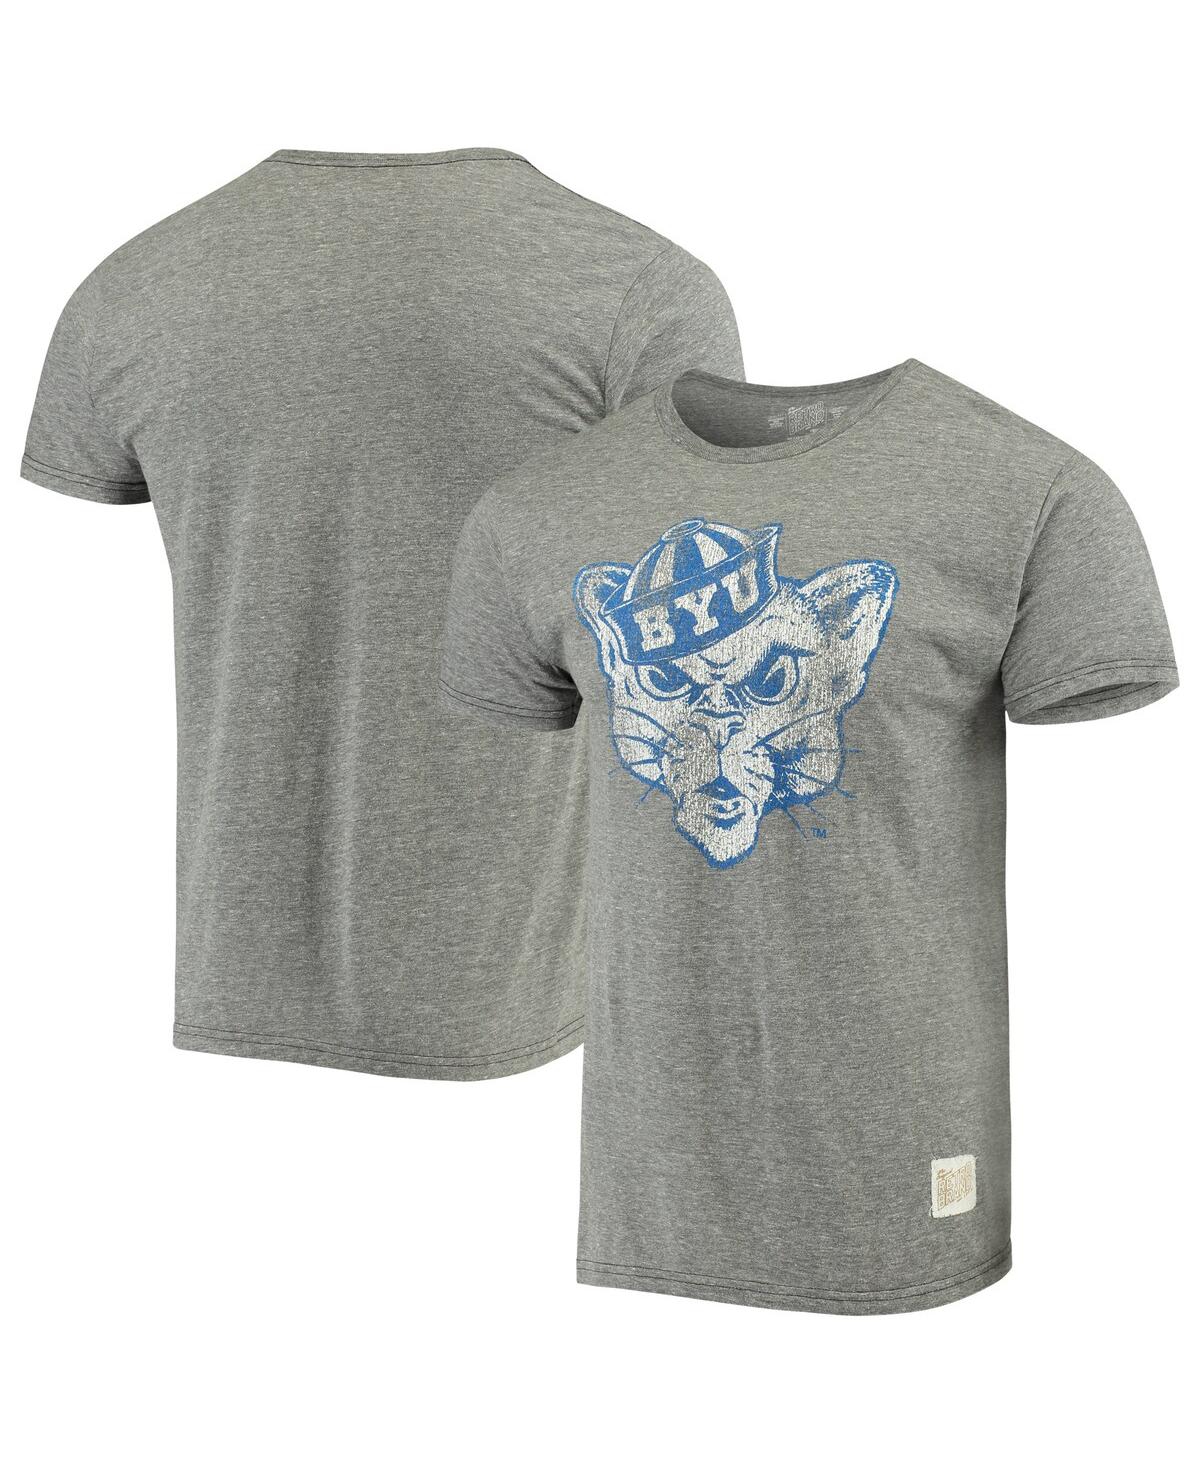 Men's Original Retro Brand Heathered Gray Byu Cougars Vintage-Like Logo Tri-Blend T-shirt - Heathered Gray